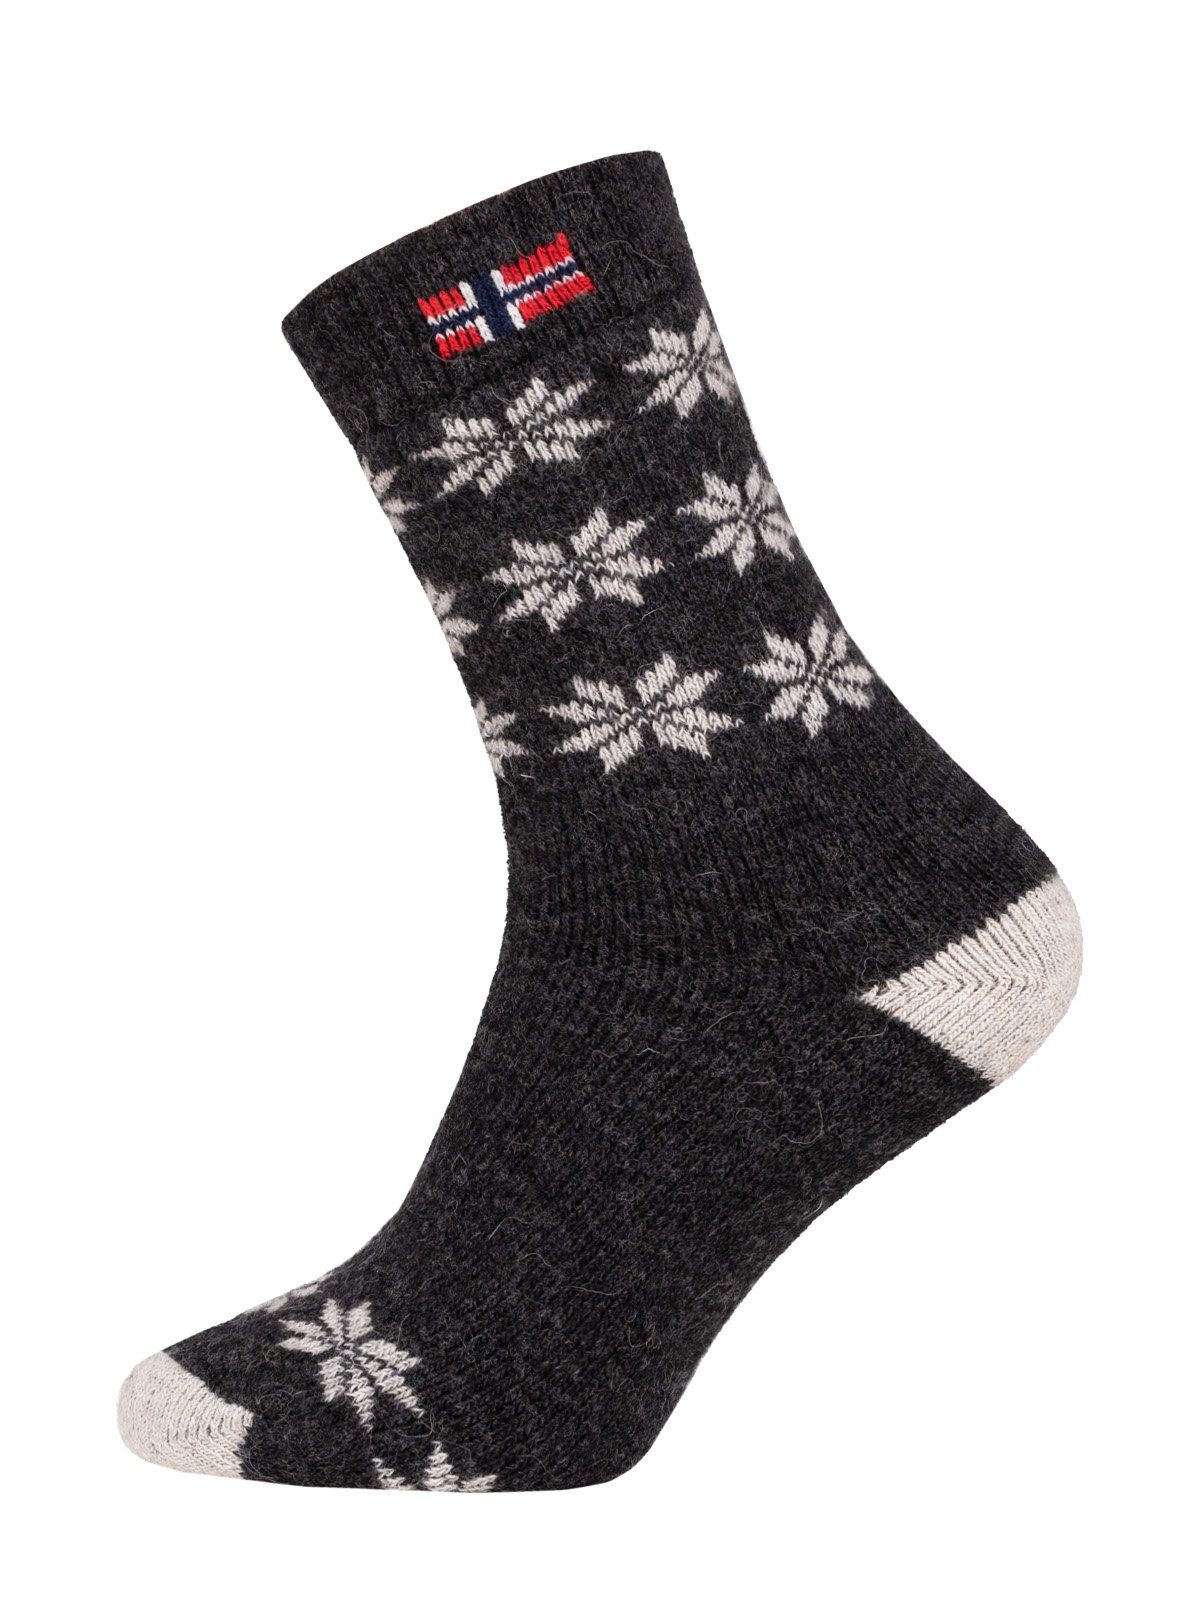 Nordic Design Hyggelig Hoher Kuschelsocken Warm Wollsocke "Snowflake Dicke Socken Socken Norwegischem Skandinavische Anthrazit Wollanteil HomeOfSocks Norwegen" 80%